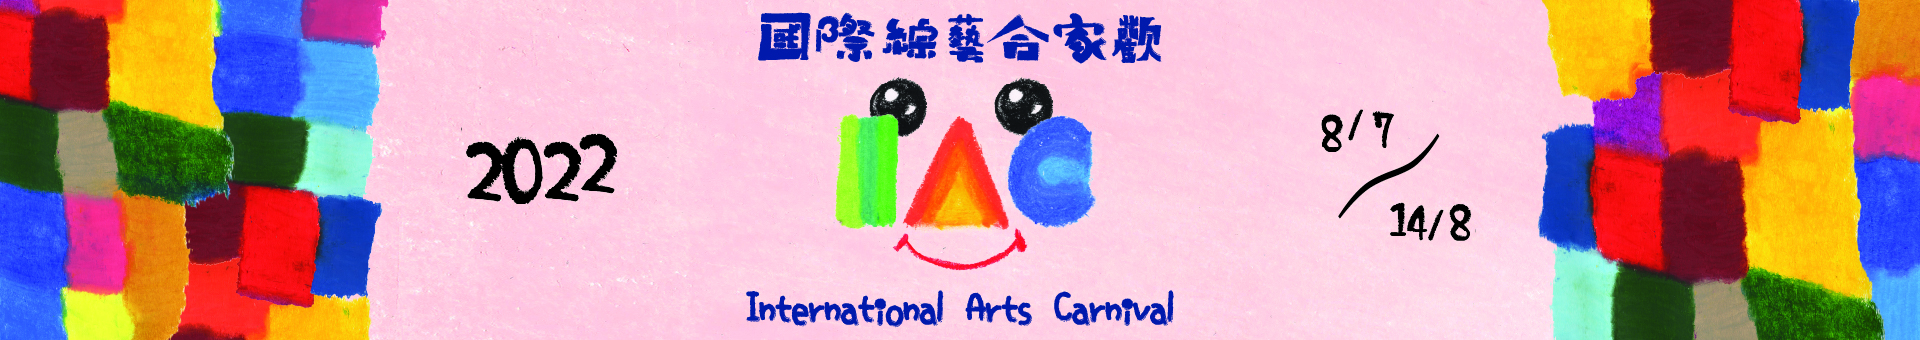 International Arts Carnival 2022